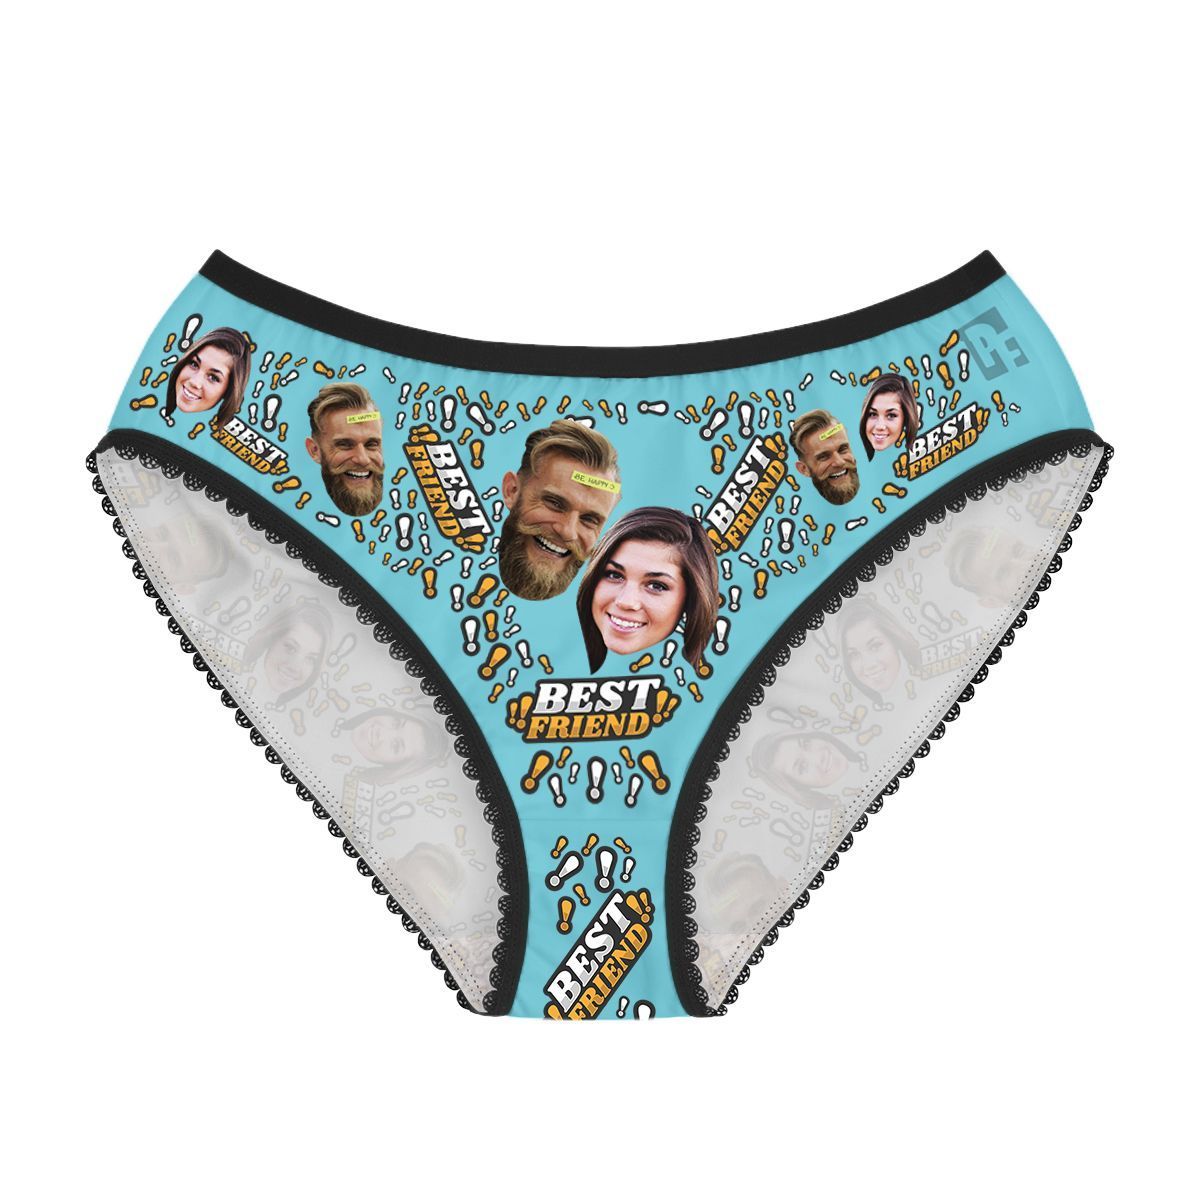 Mint Best Friend women's underwear briefs personalized with photo printed on them